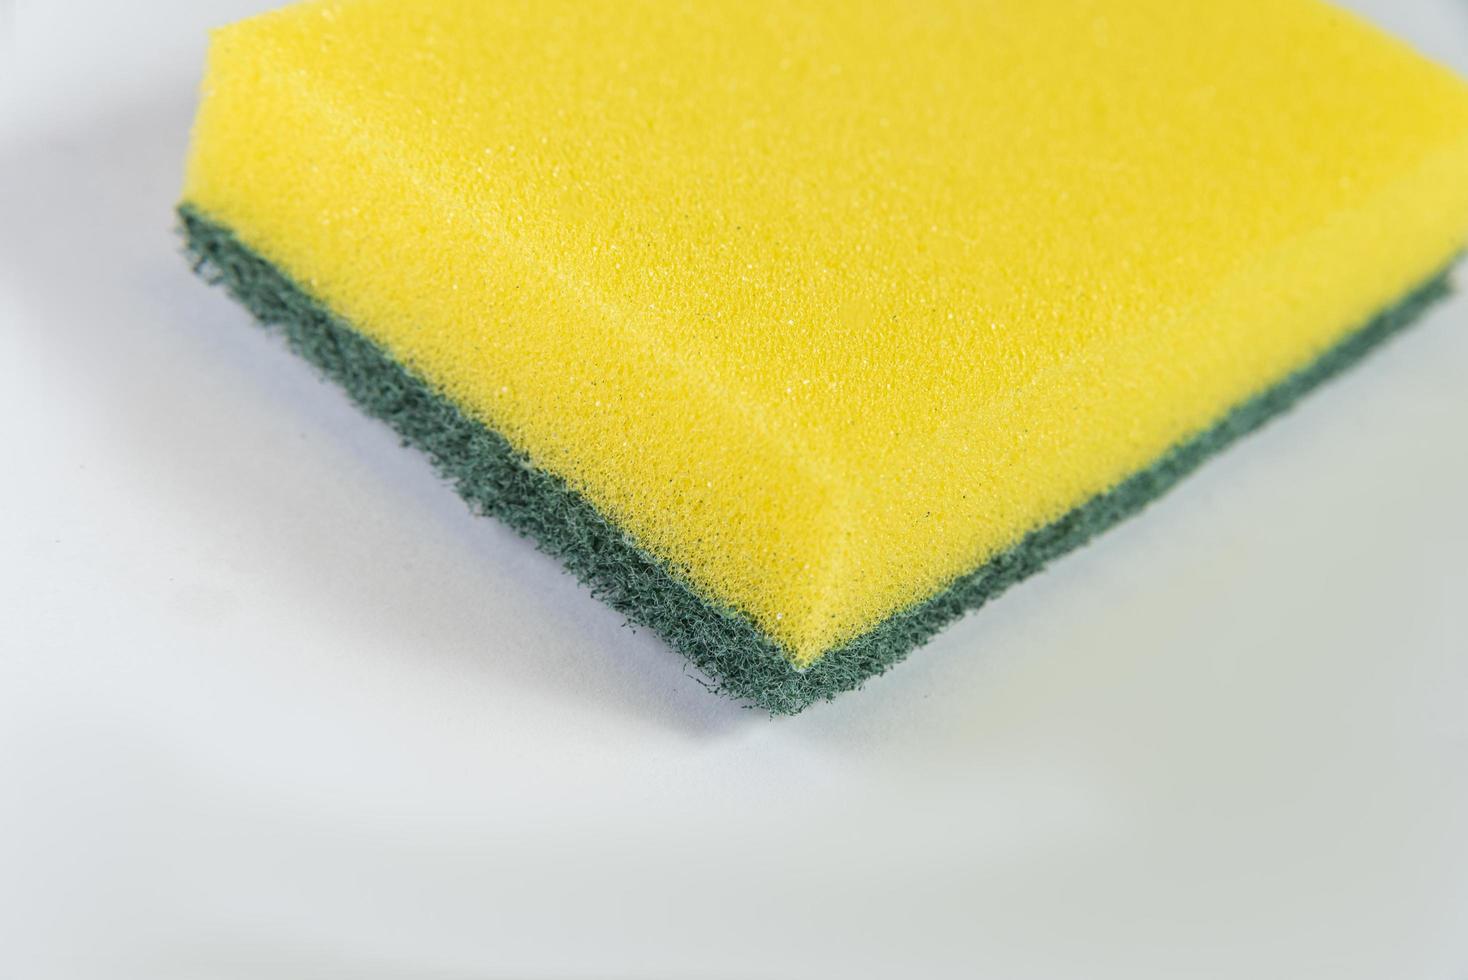 Kitchen sponge on the white background photo